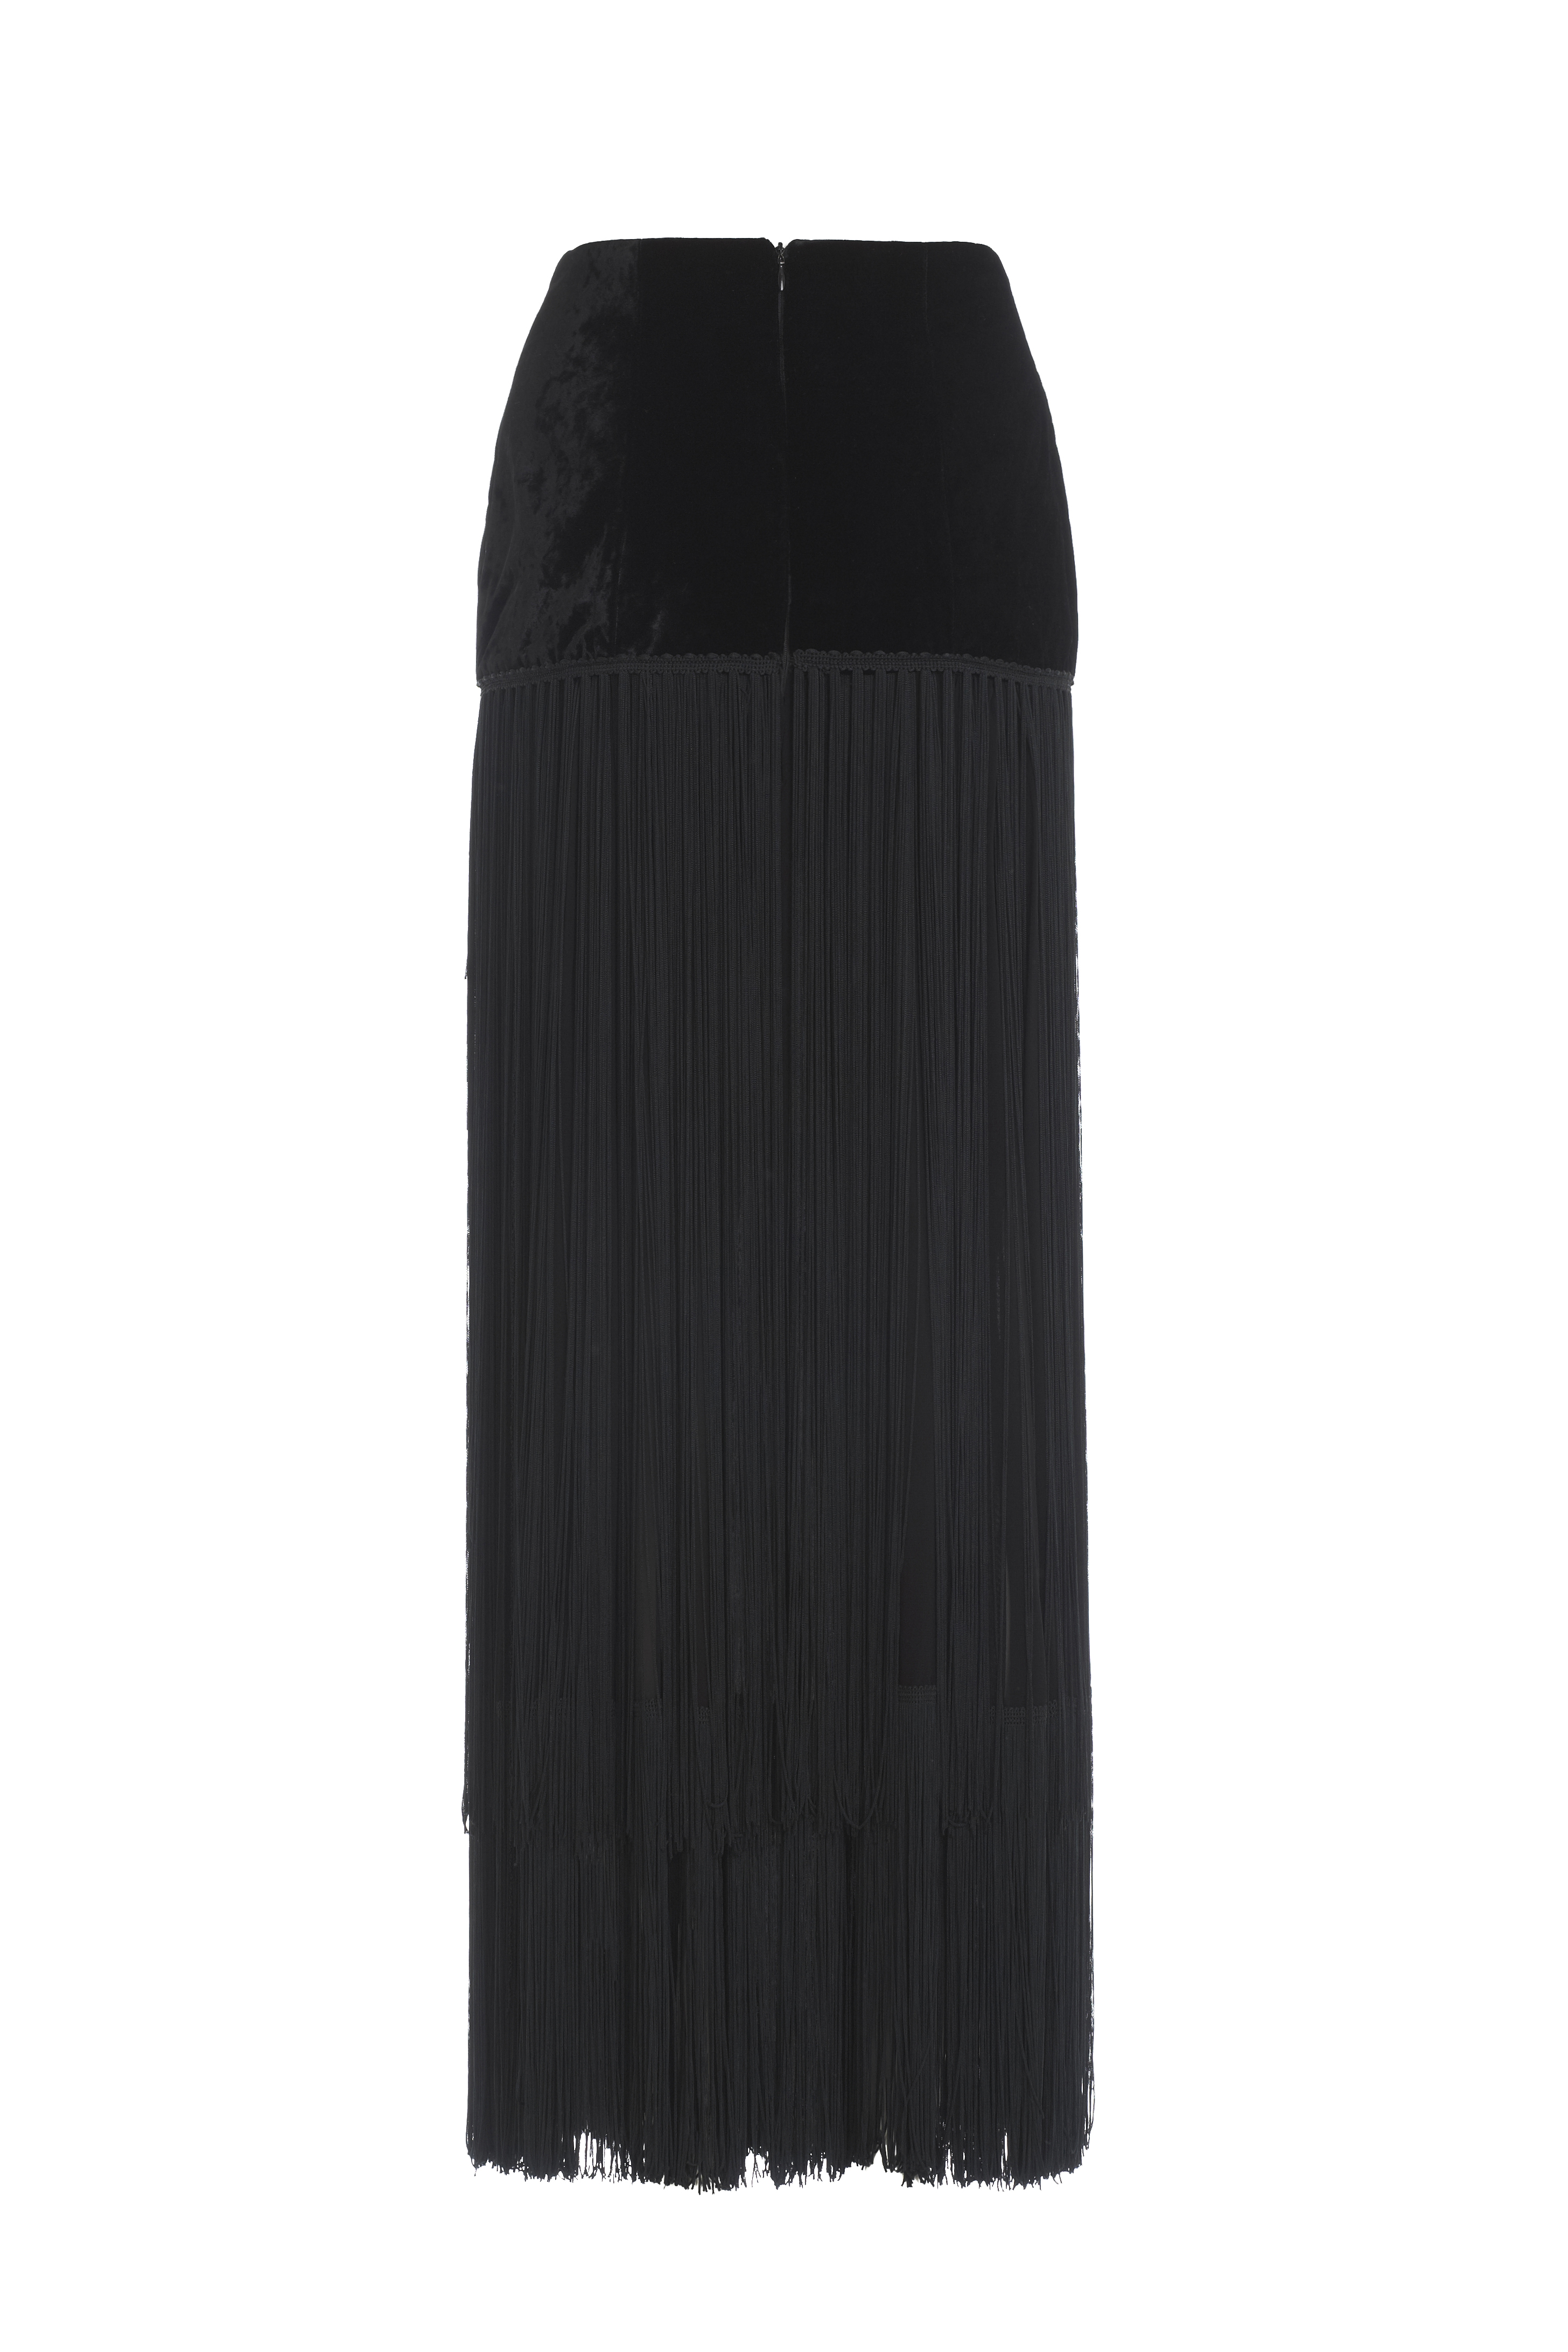 Dolce & Gabbana black high waisted skirt with tassles | Curate8